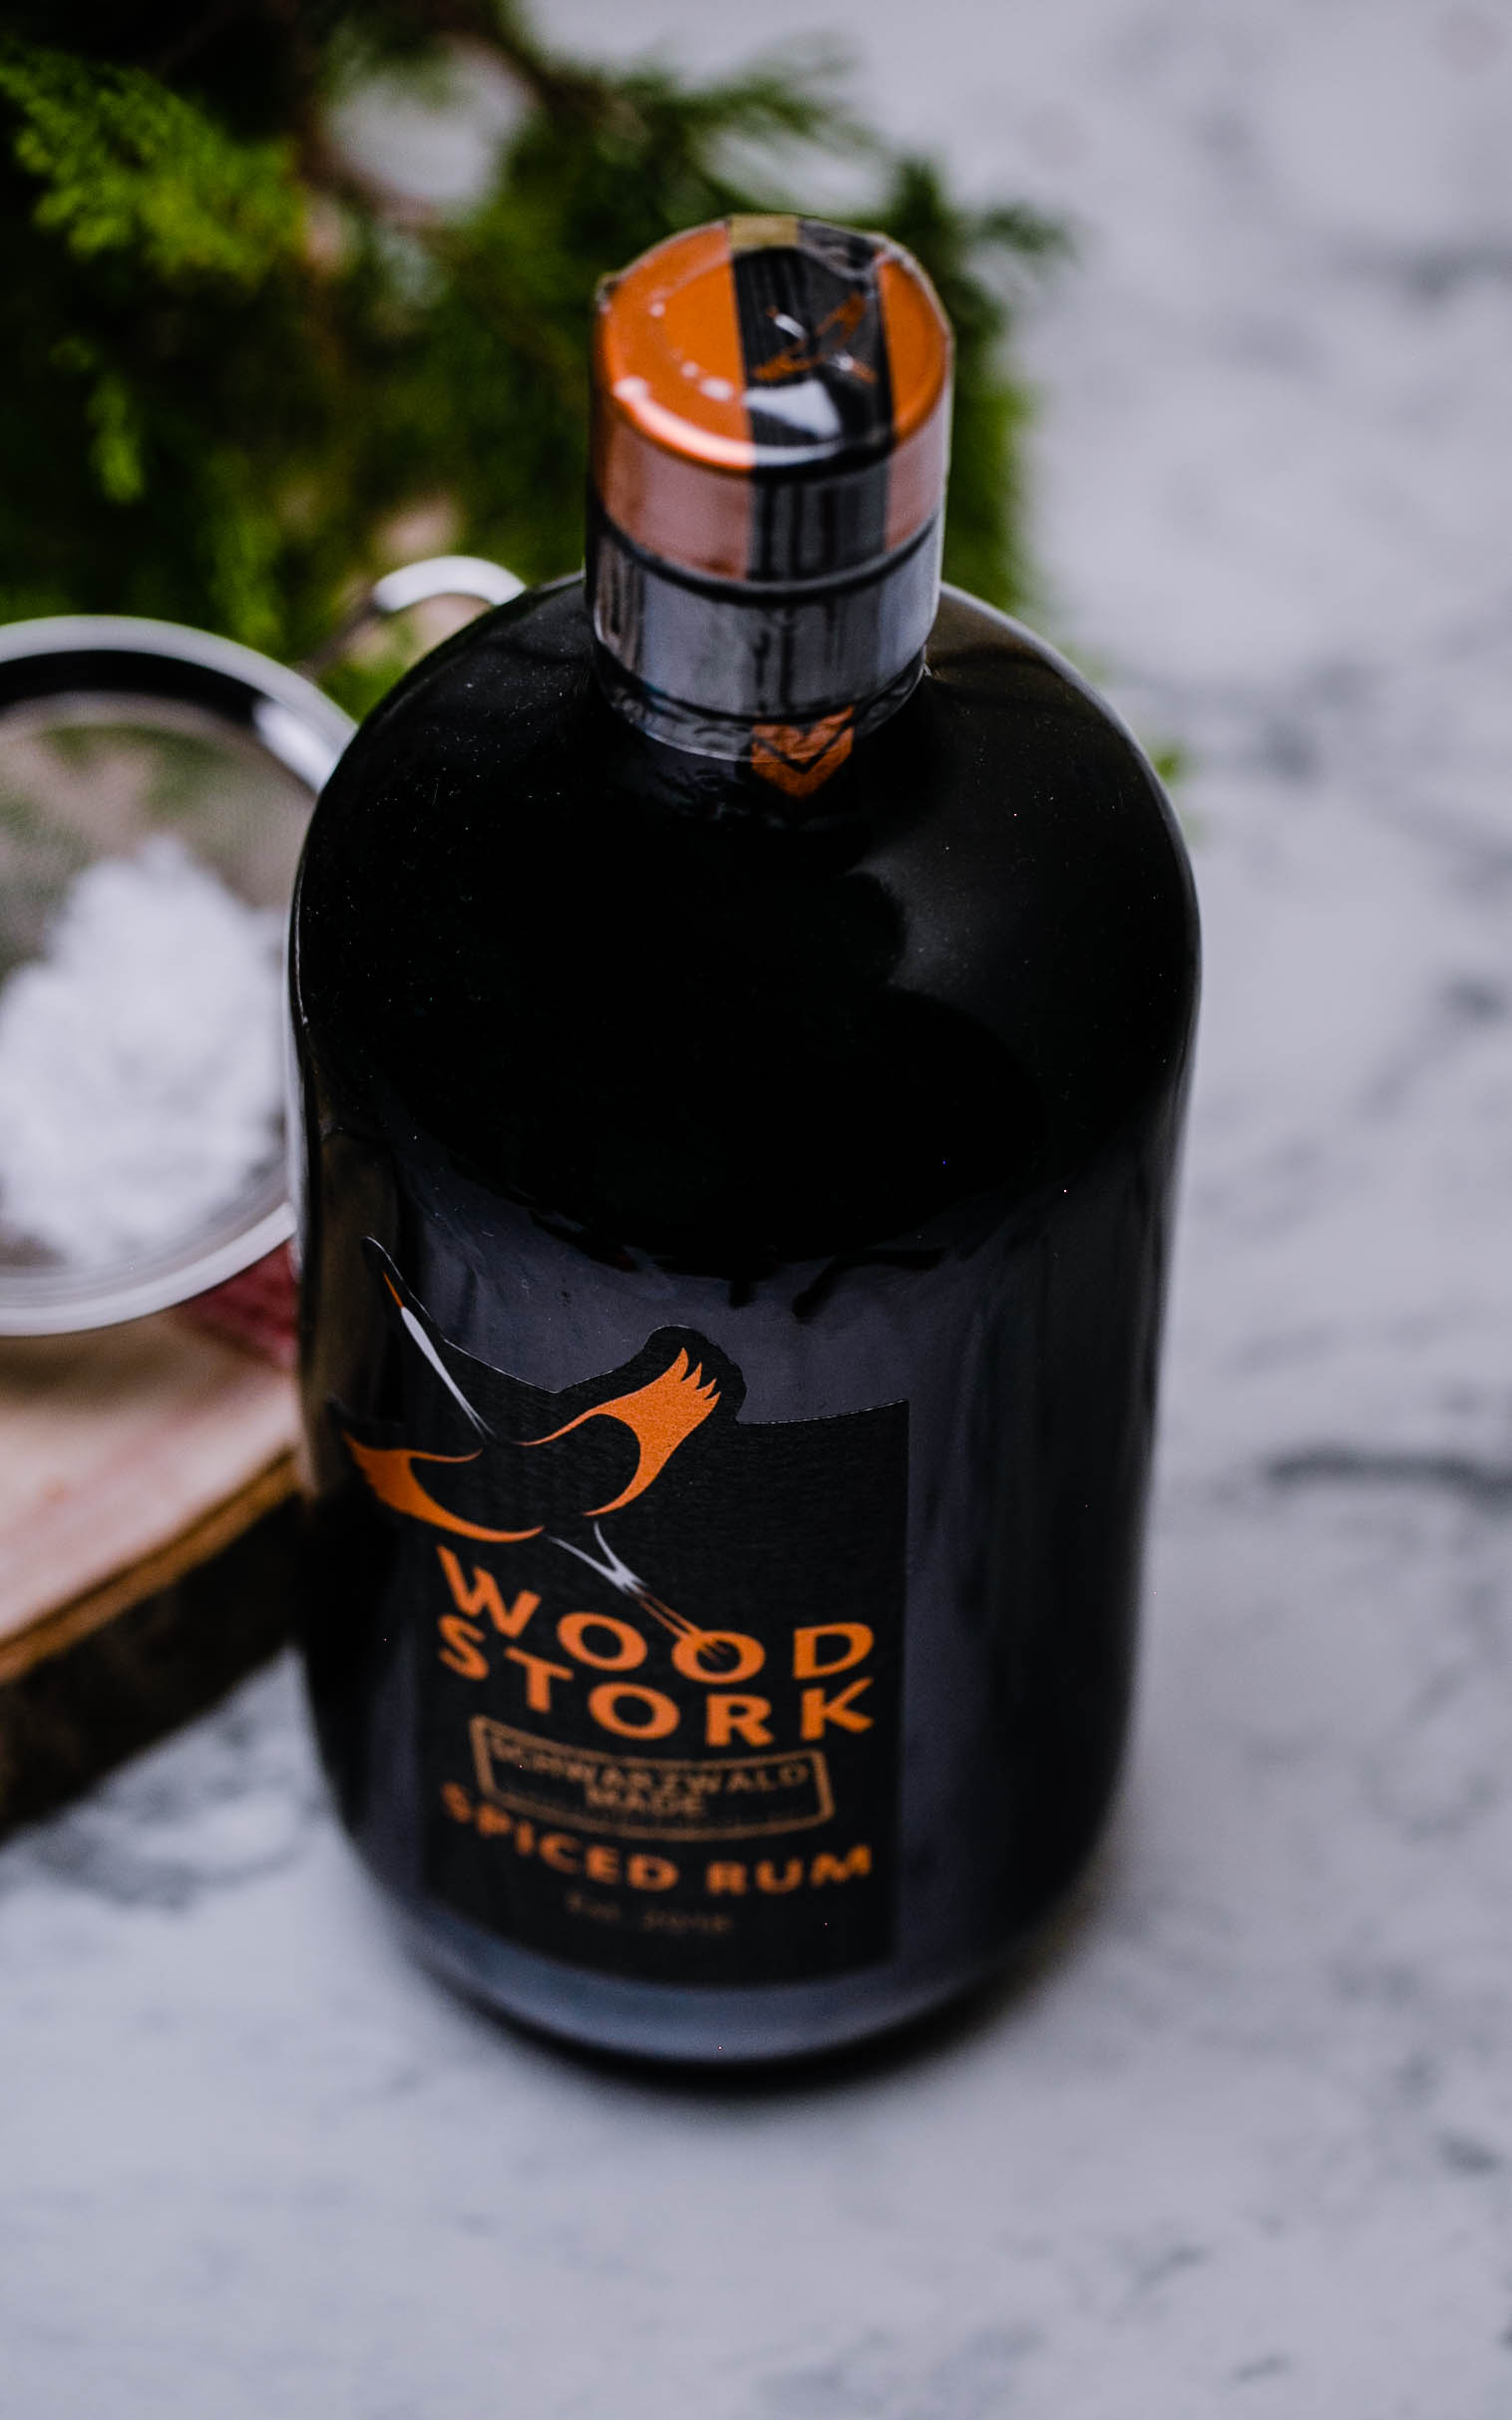  Wood Stork Spiced Rum 